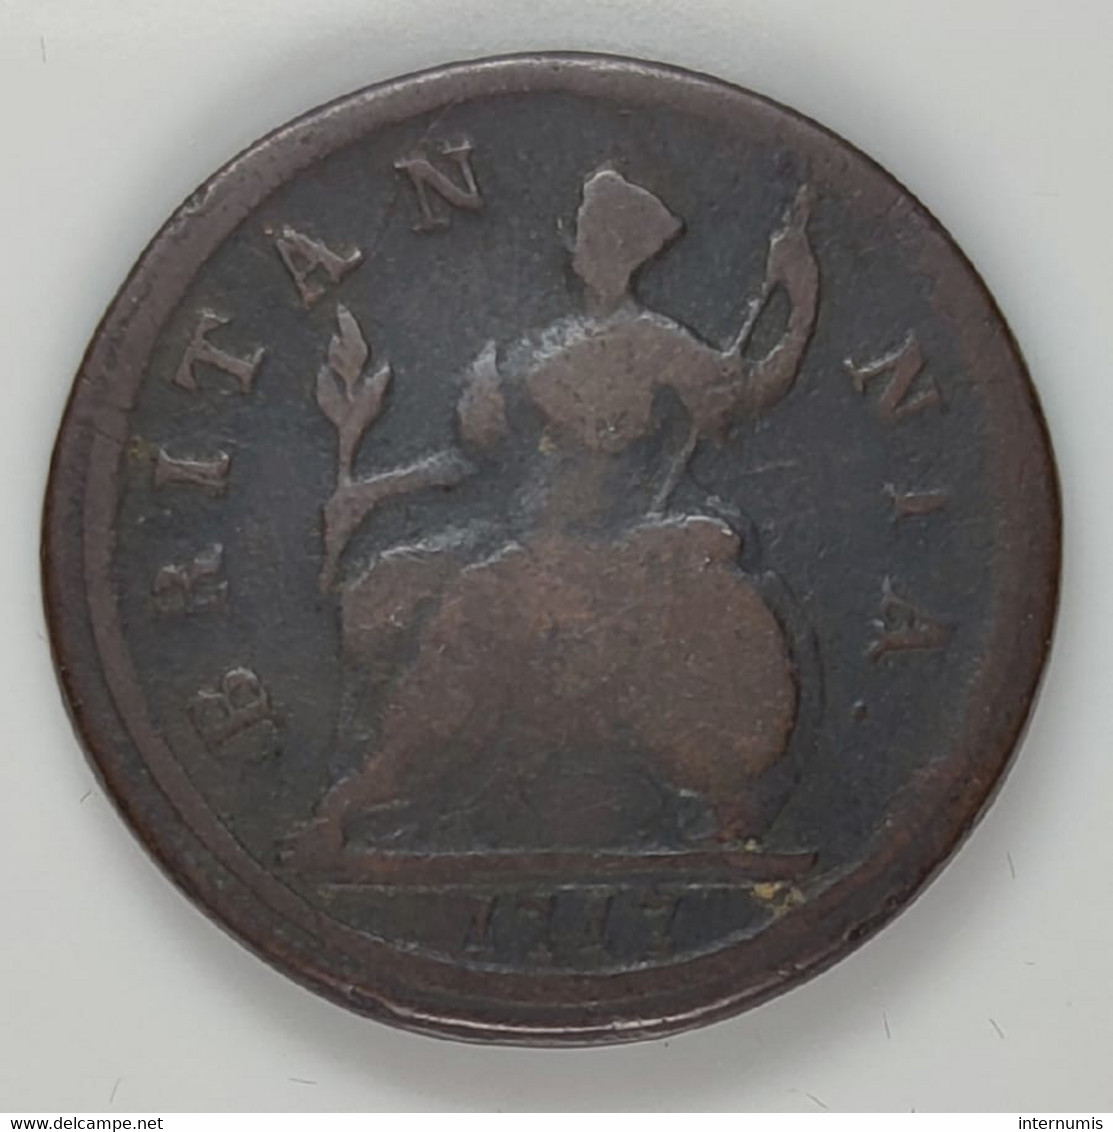 Angleterre / UK, 1/2 Halfpenny, 1717, , Cuivre (Copper), B (VG), KM#549, Sp.3659 - B. 1/2 Penny